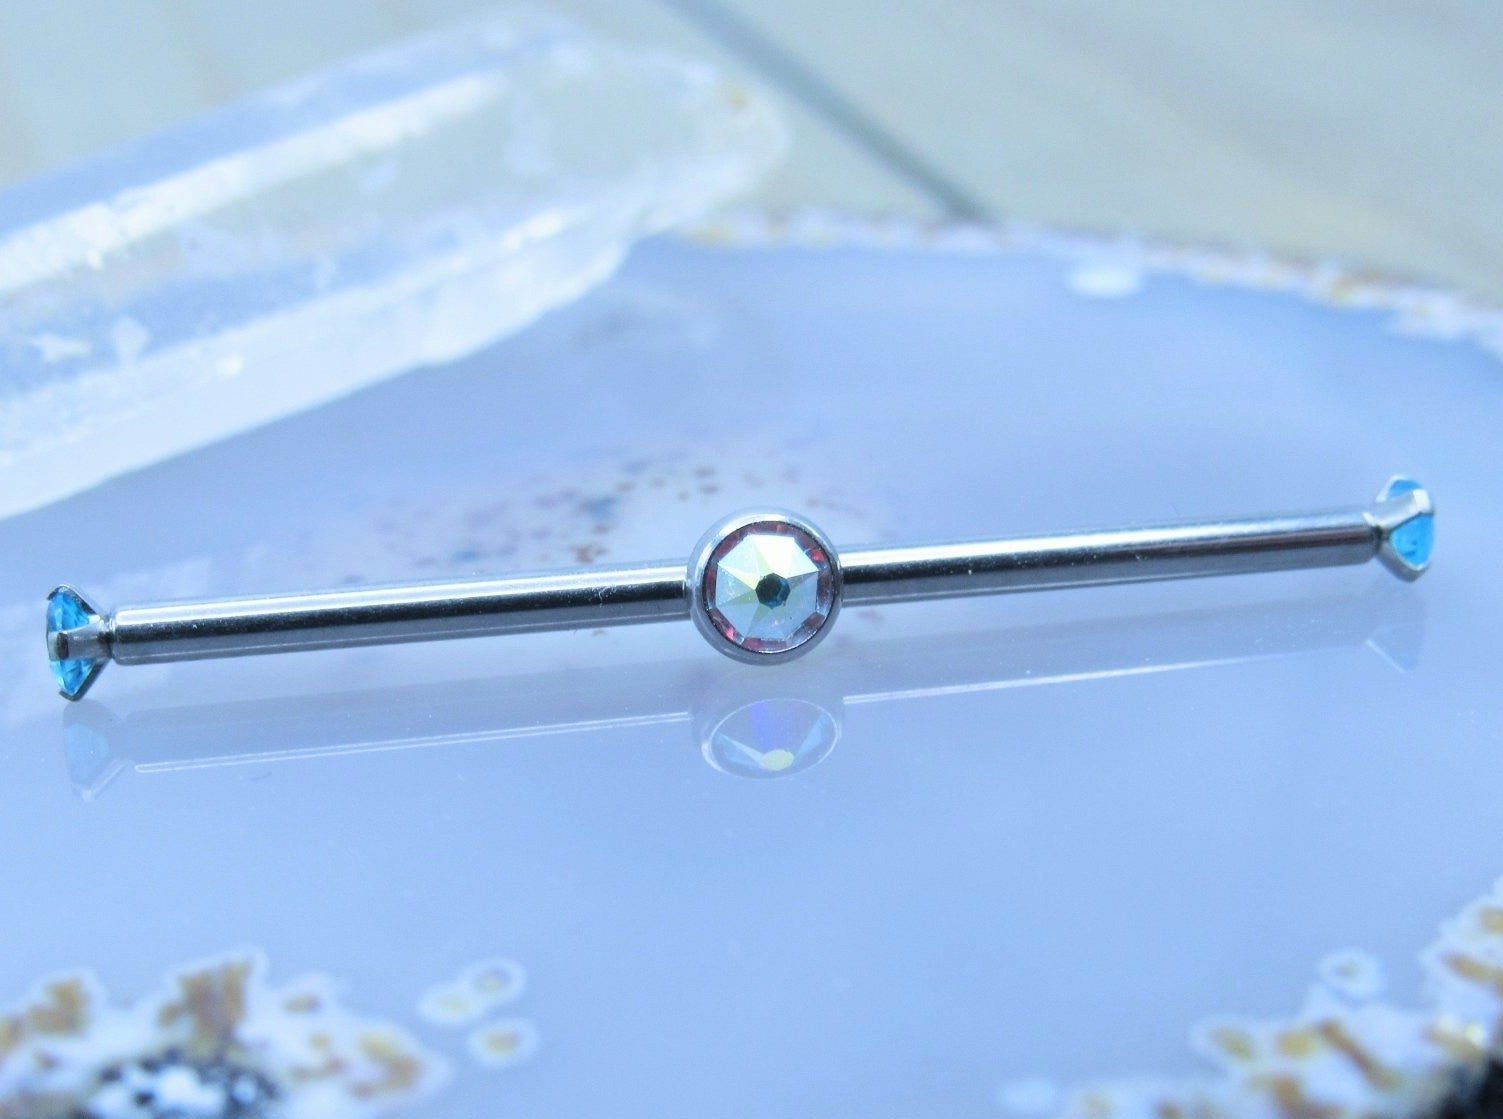 Gemstone industrial piercing barbell 14g internally threaded titanium scaffold body jewelry aurora borealis light blue cz stones - Siren Body Jewelry